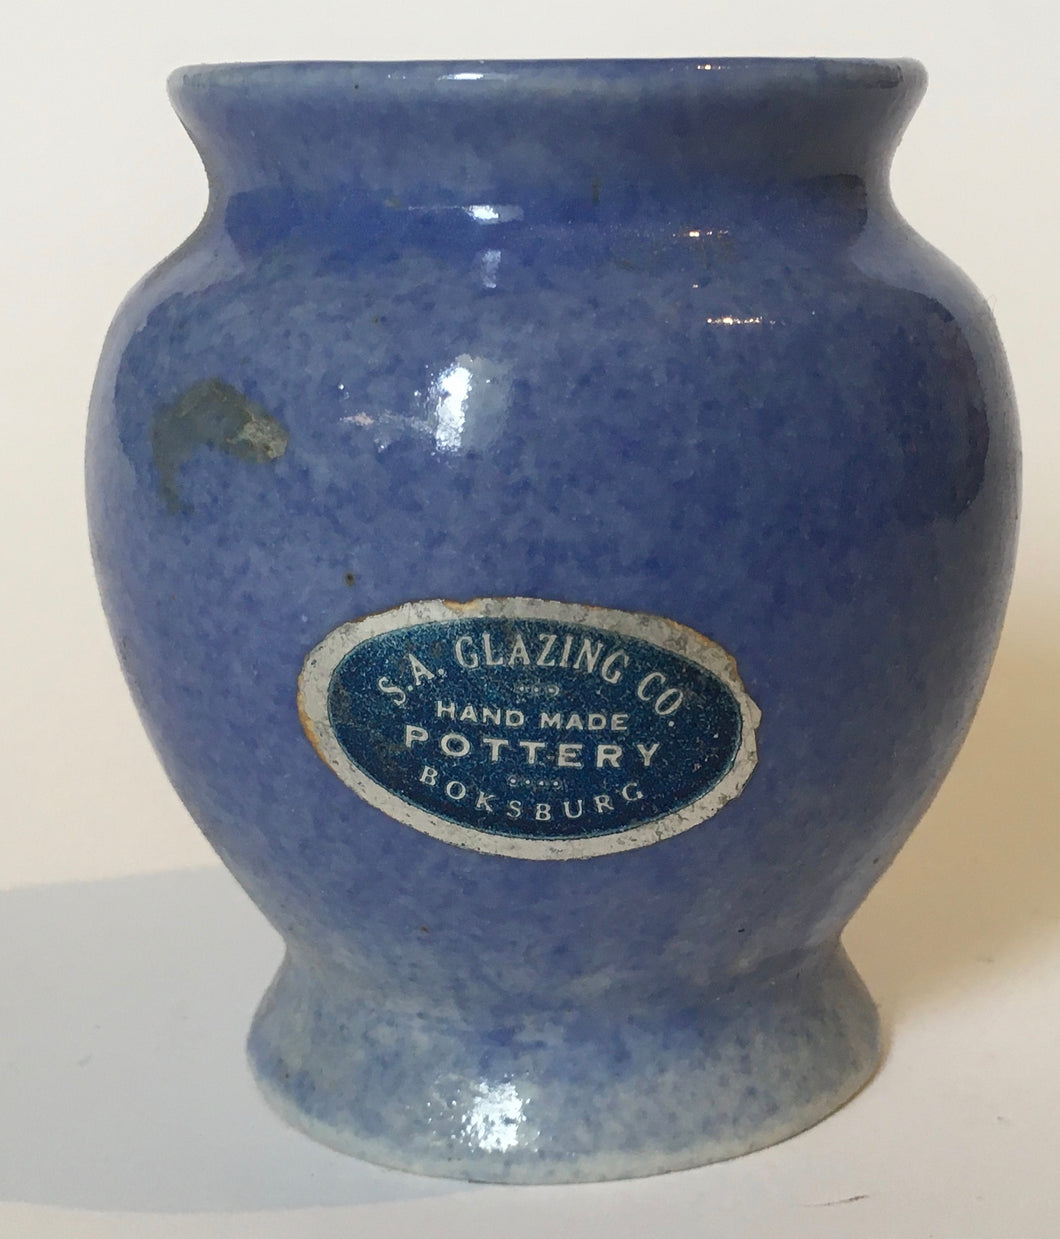 S.A. Glazing co. - Boksburg East Pottery BEP shape 1531 blue glazed vase (South African)